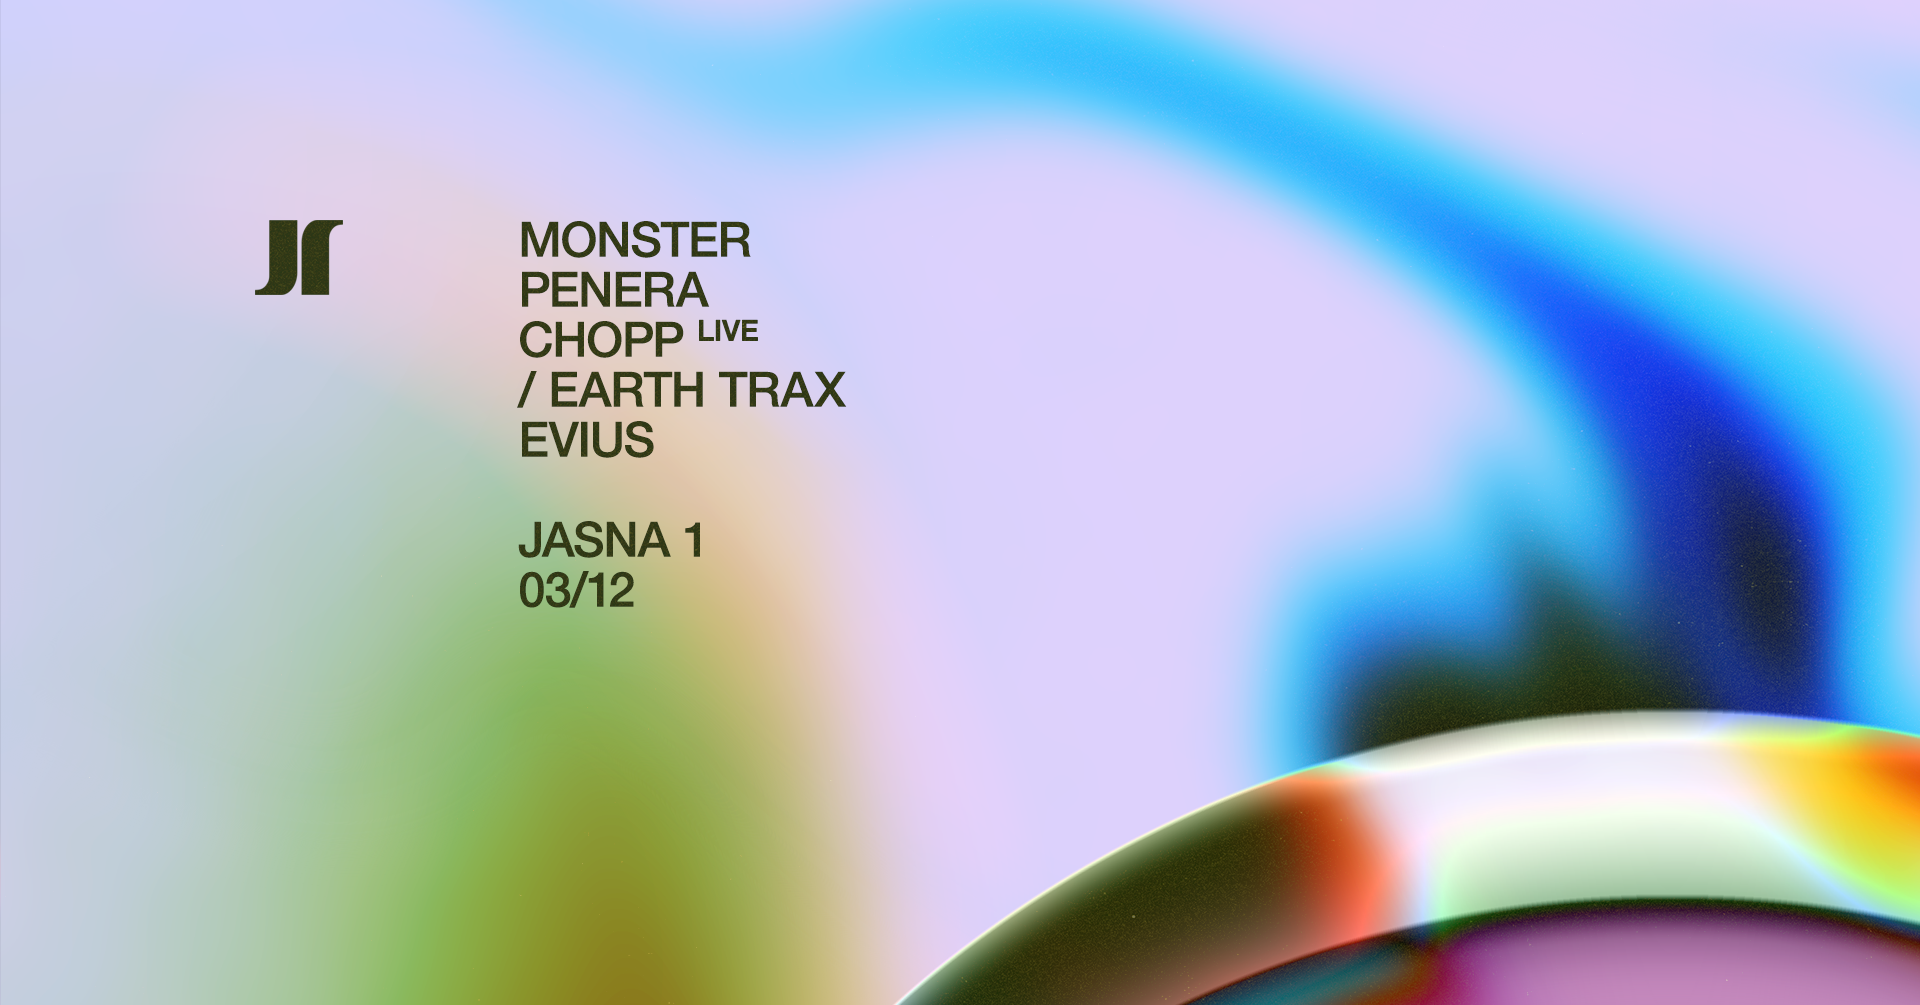 J1 - Monster, Penera, Chopp LIVE / Earth Trax, Evius - フライヤー表